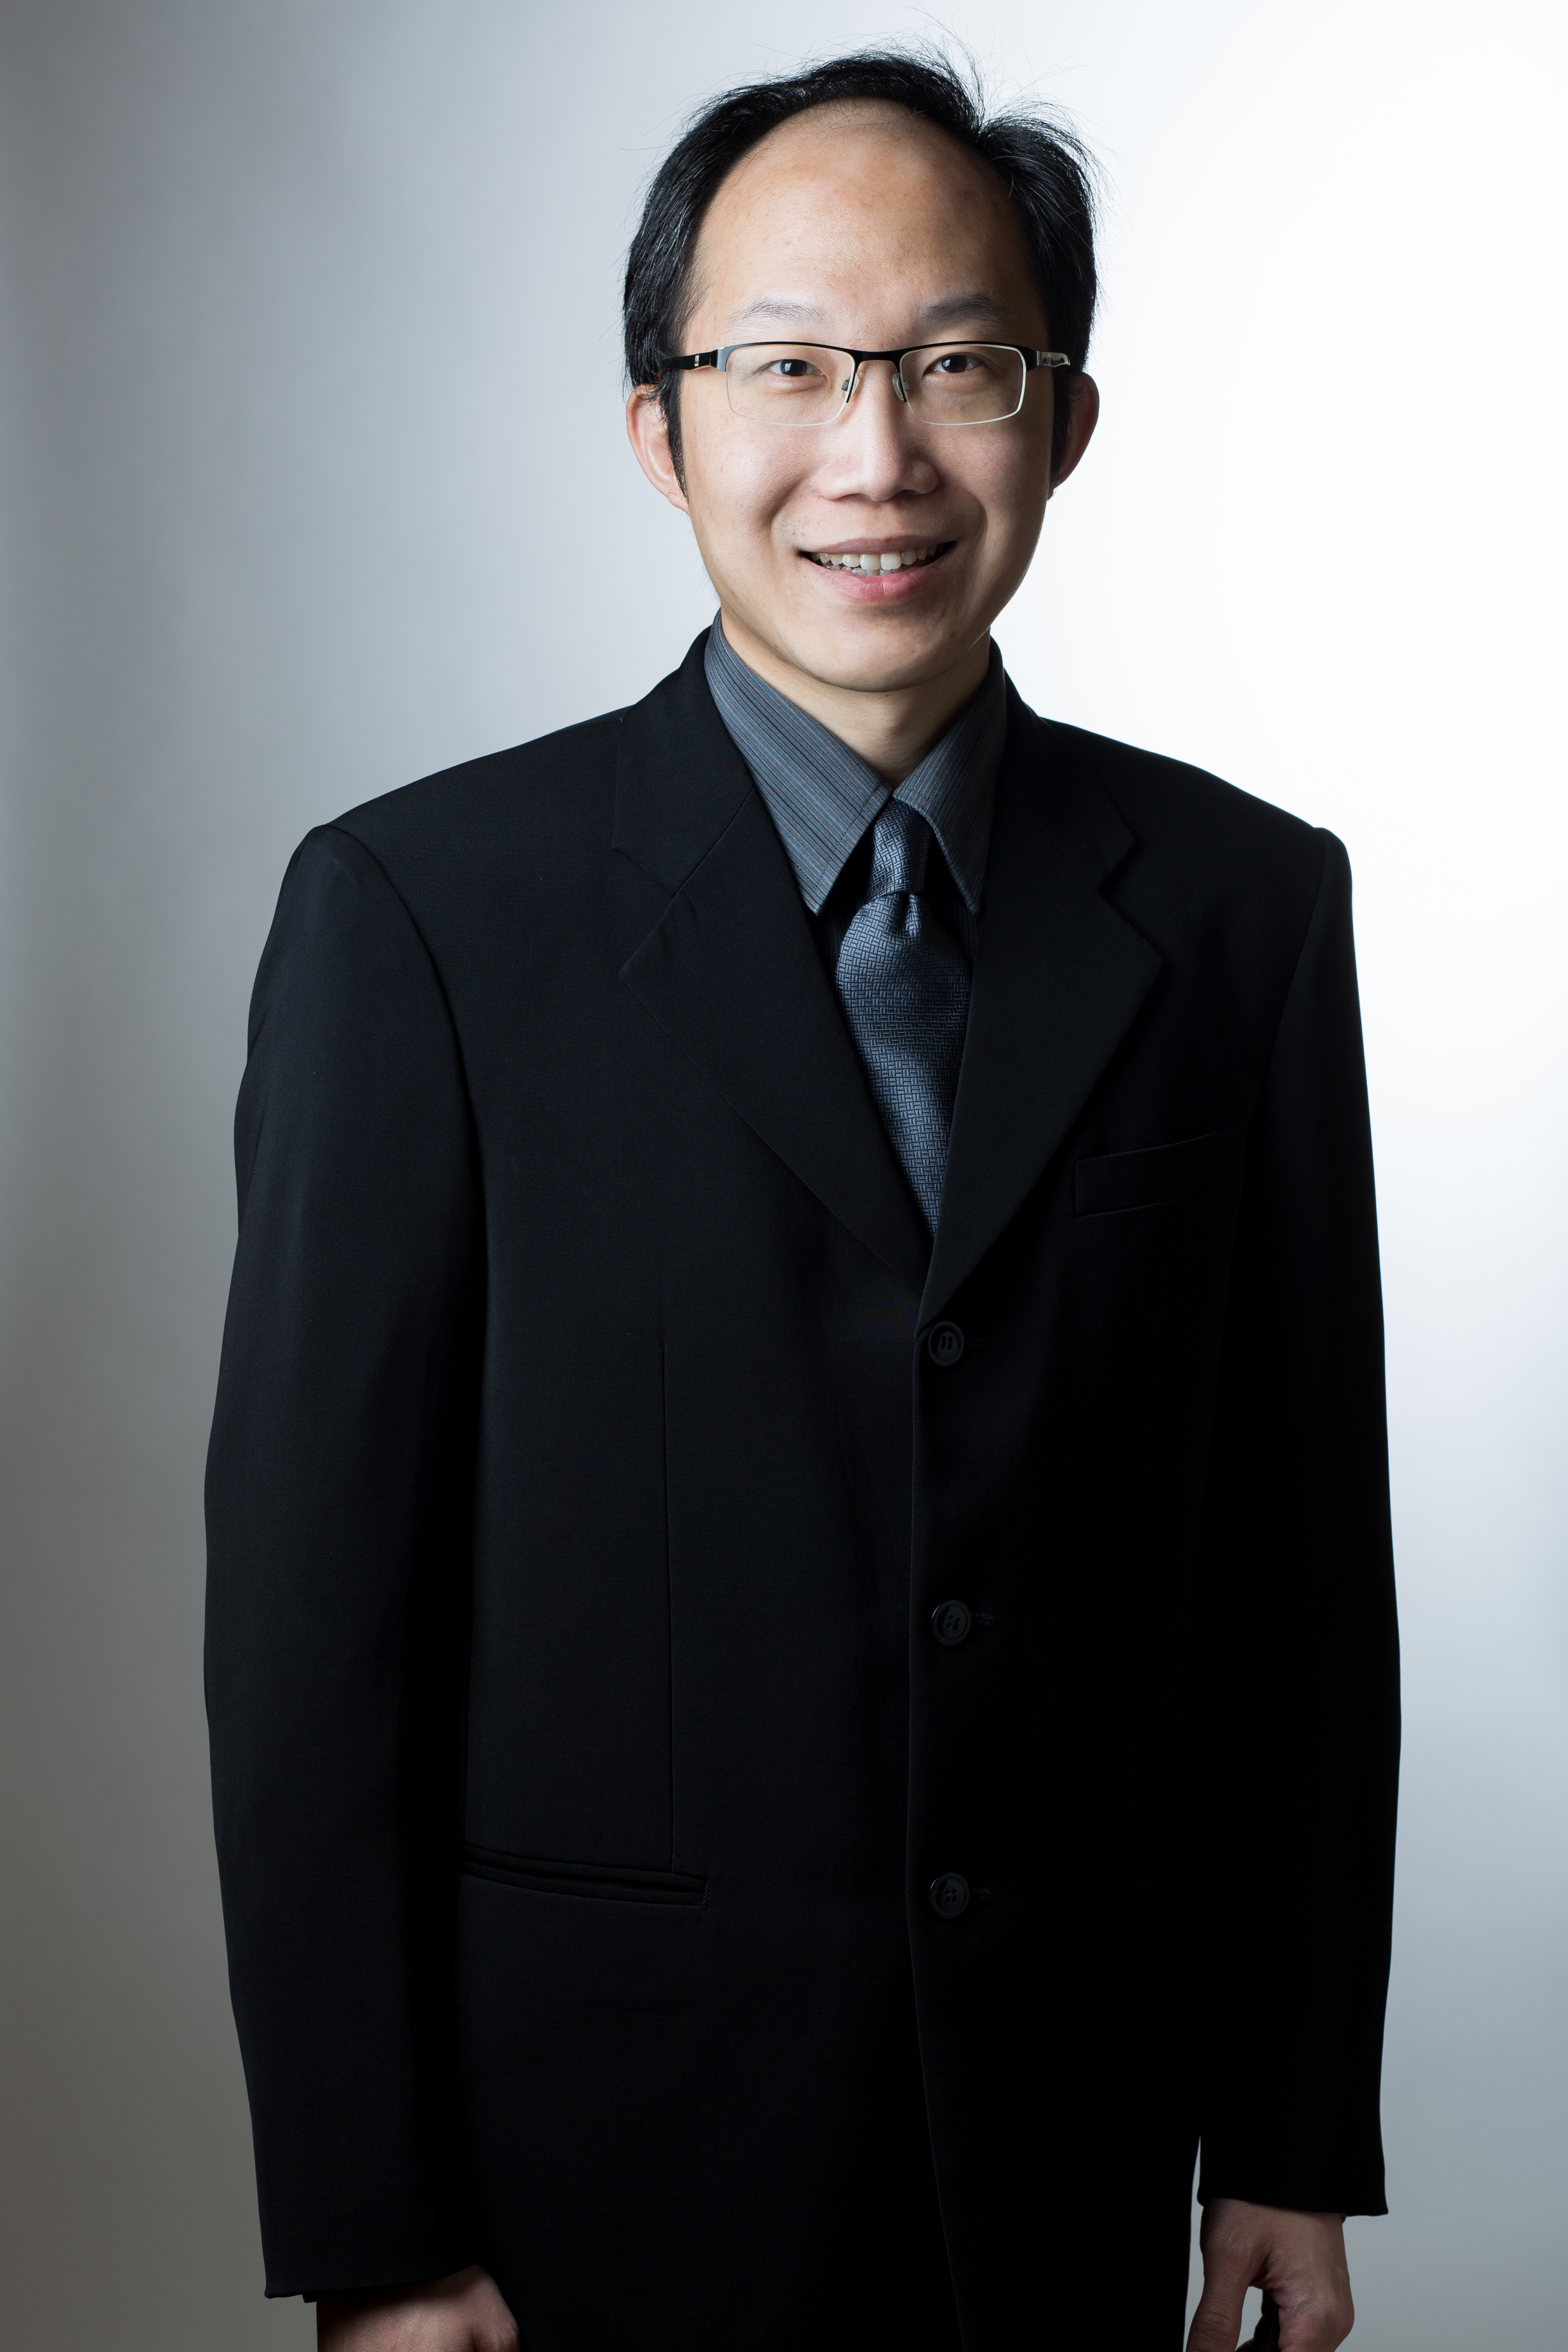 Dr Tan Chien Sheng